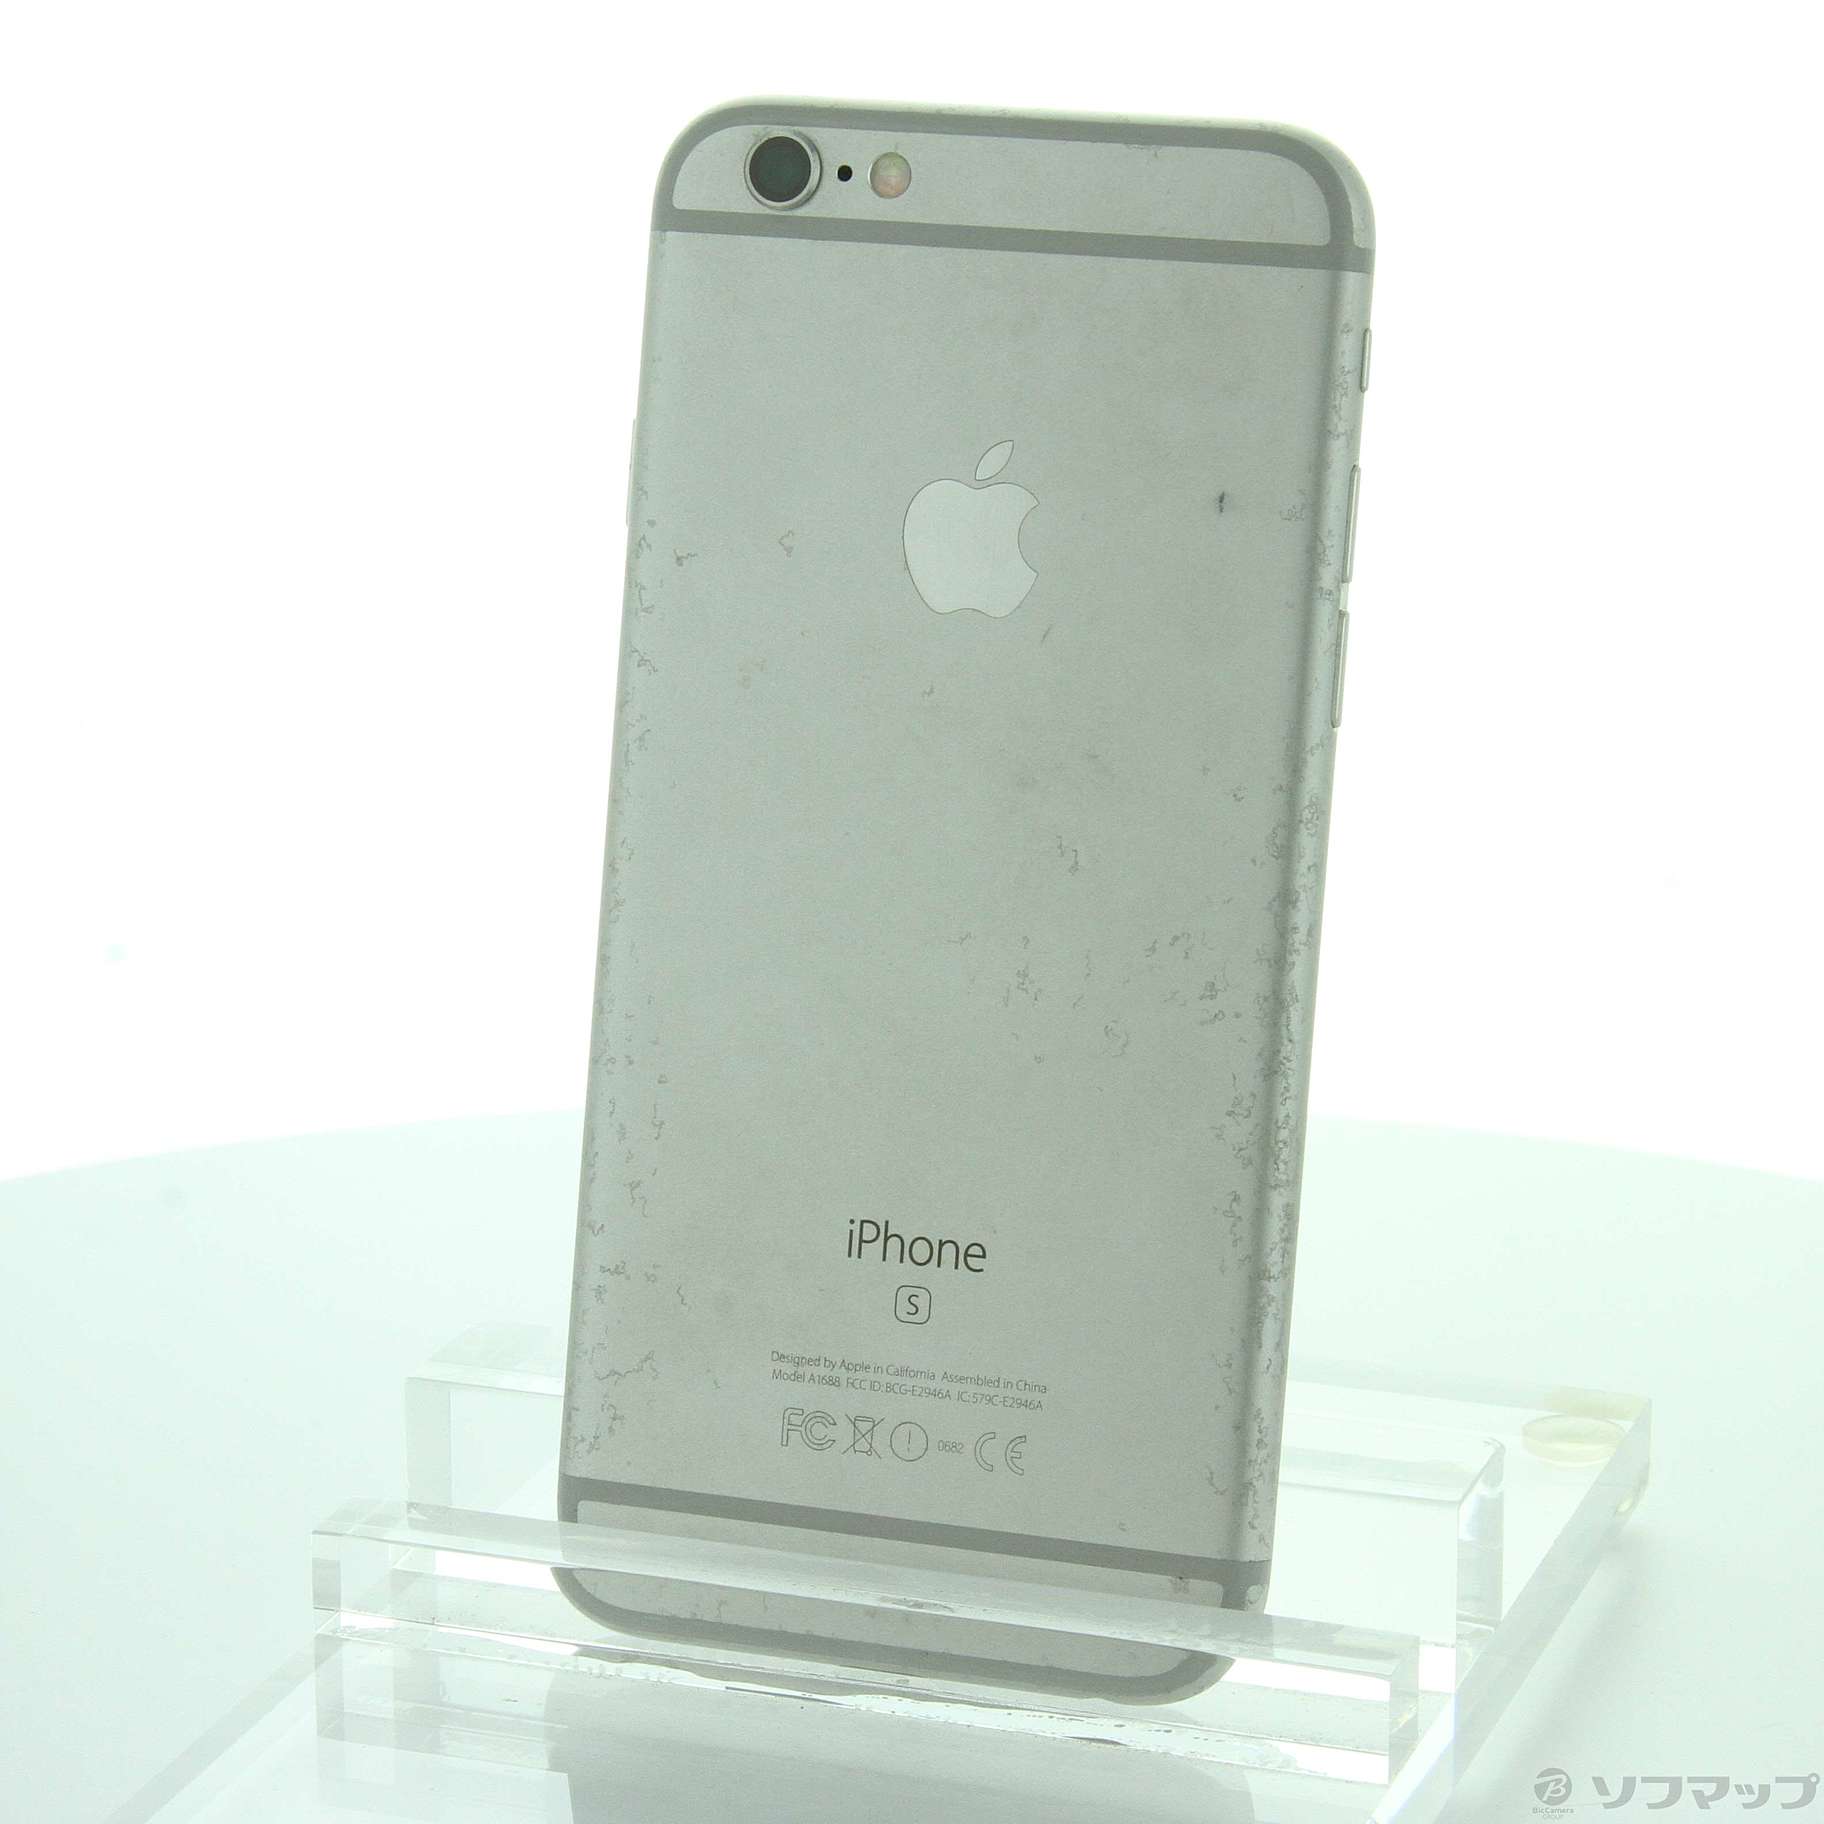 Apple iPhone 6 silver 16GB - 携帯電話本体